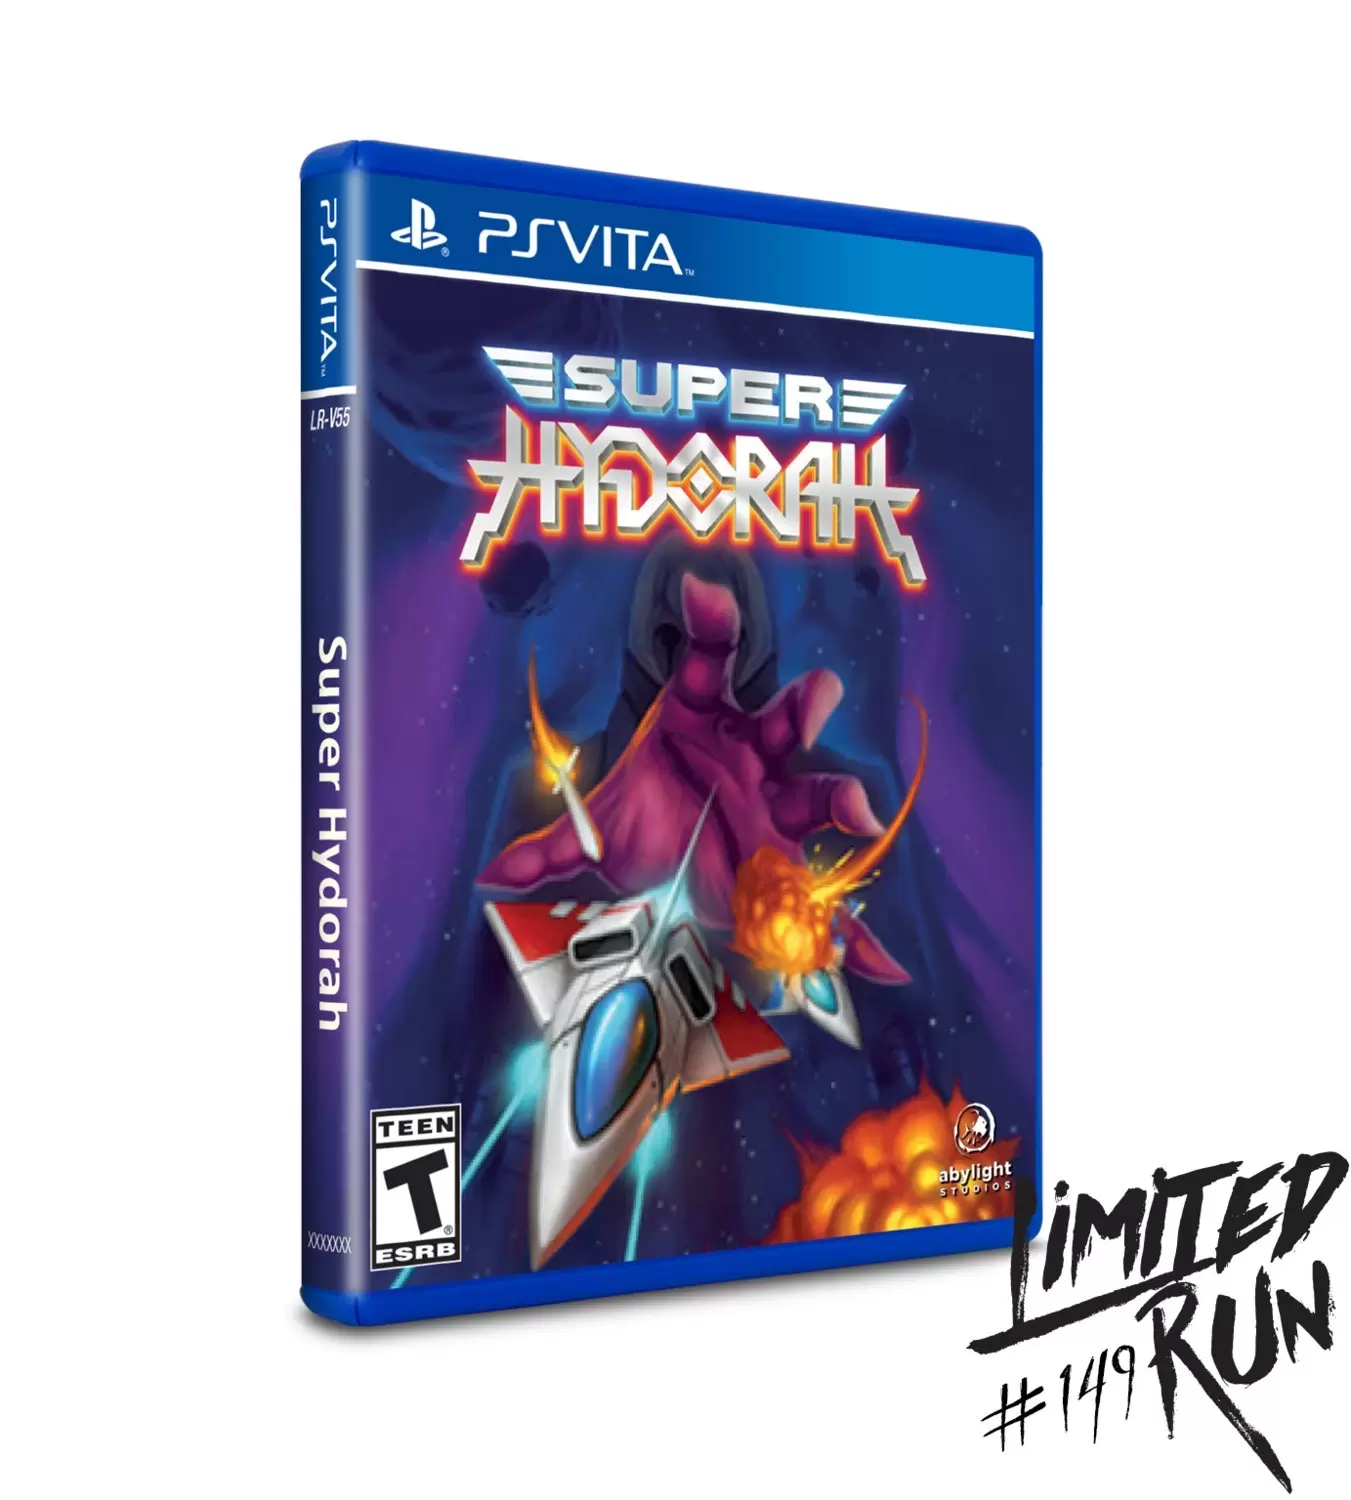 PS Vita Games - Super Hydorah